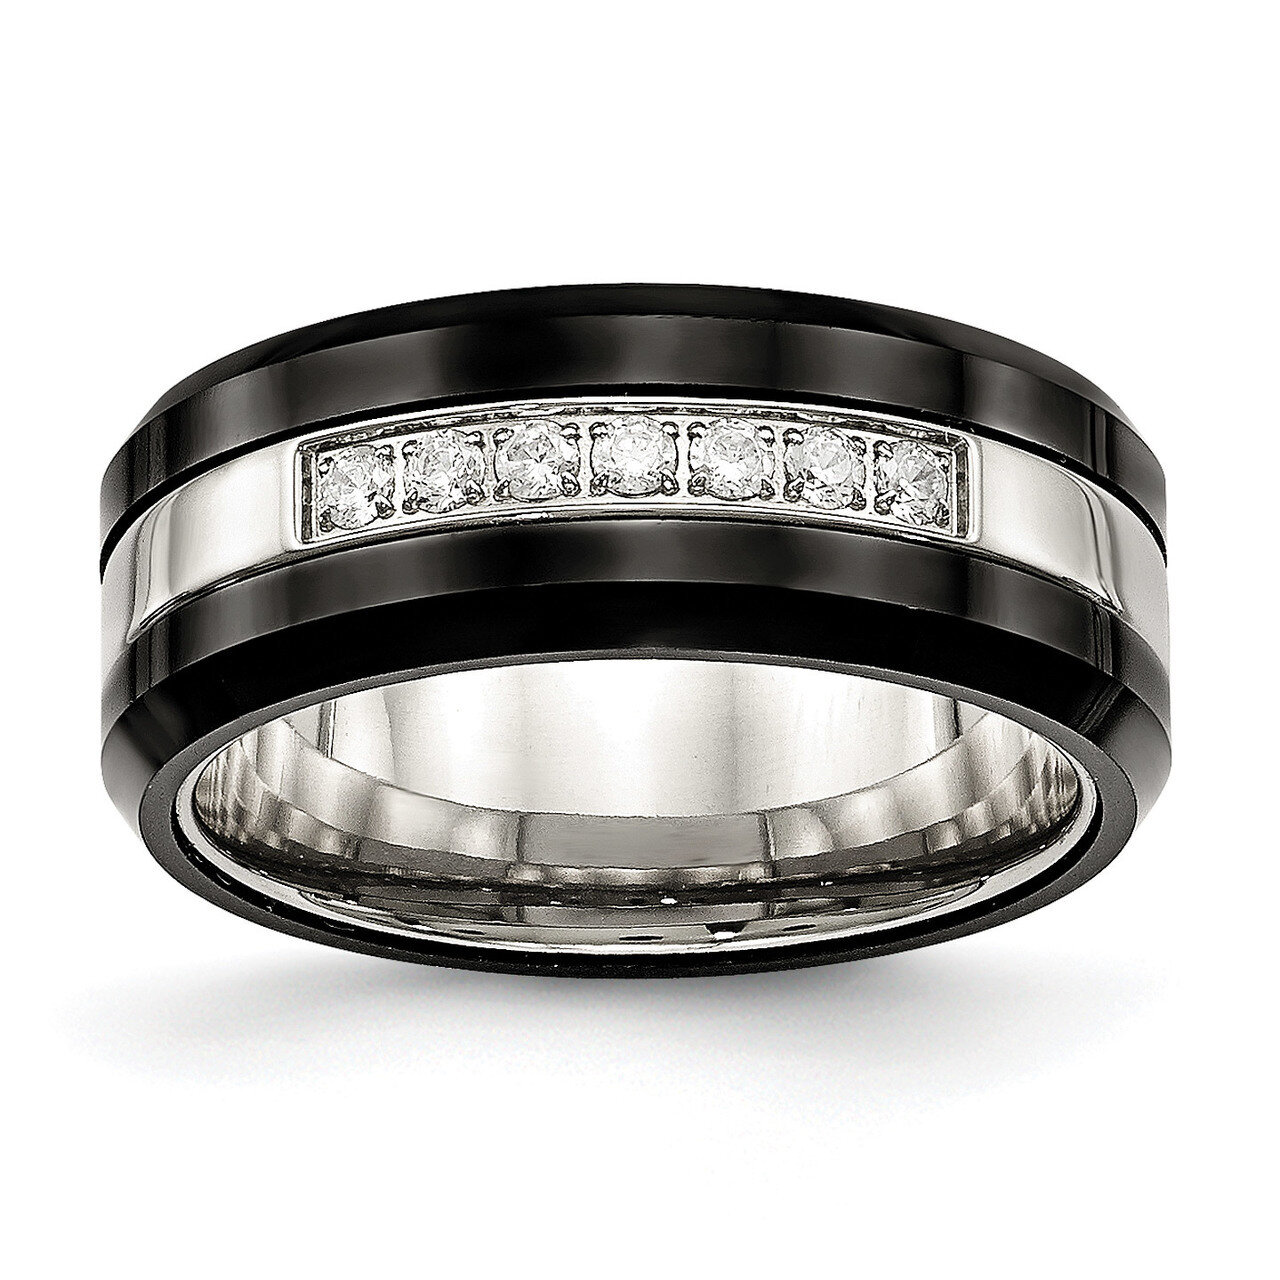 Black Ceramic CZ Diamond Beveled Edge Ring Stainless Steel Polished SR563